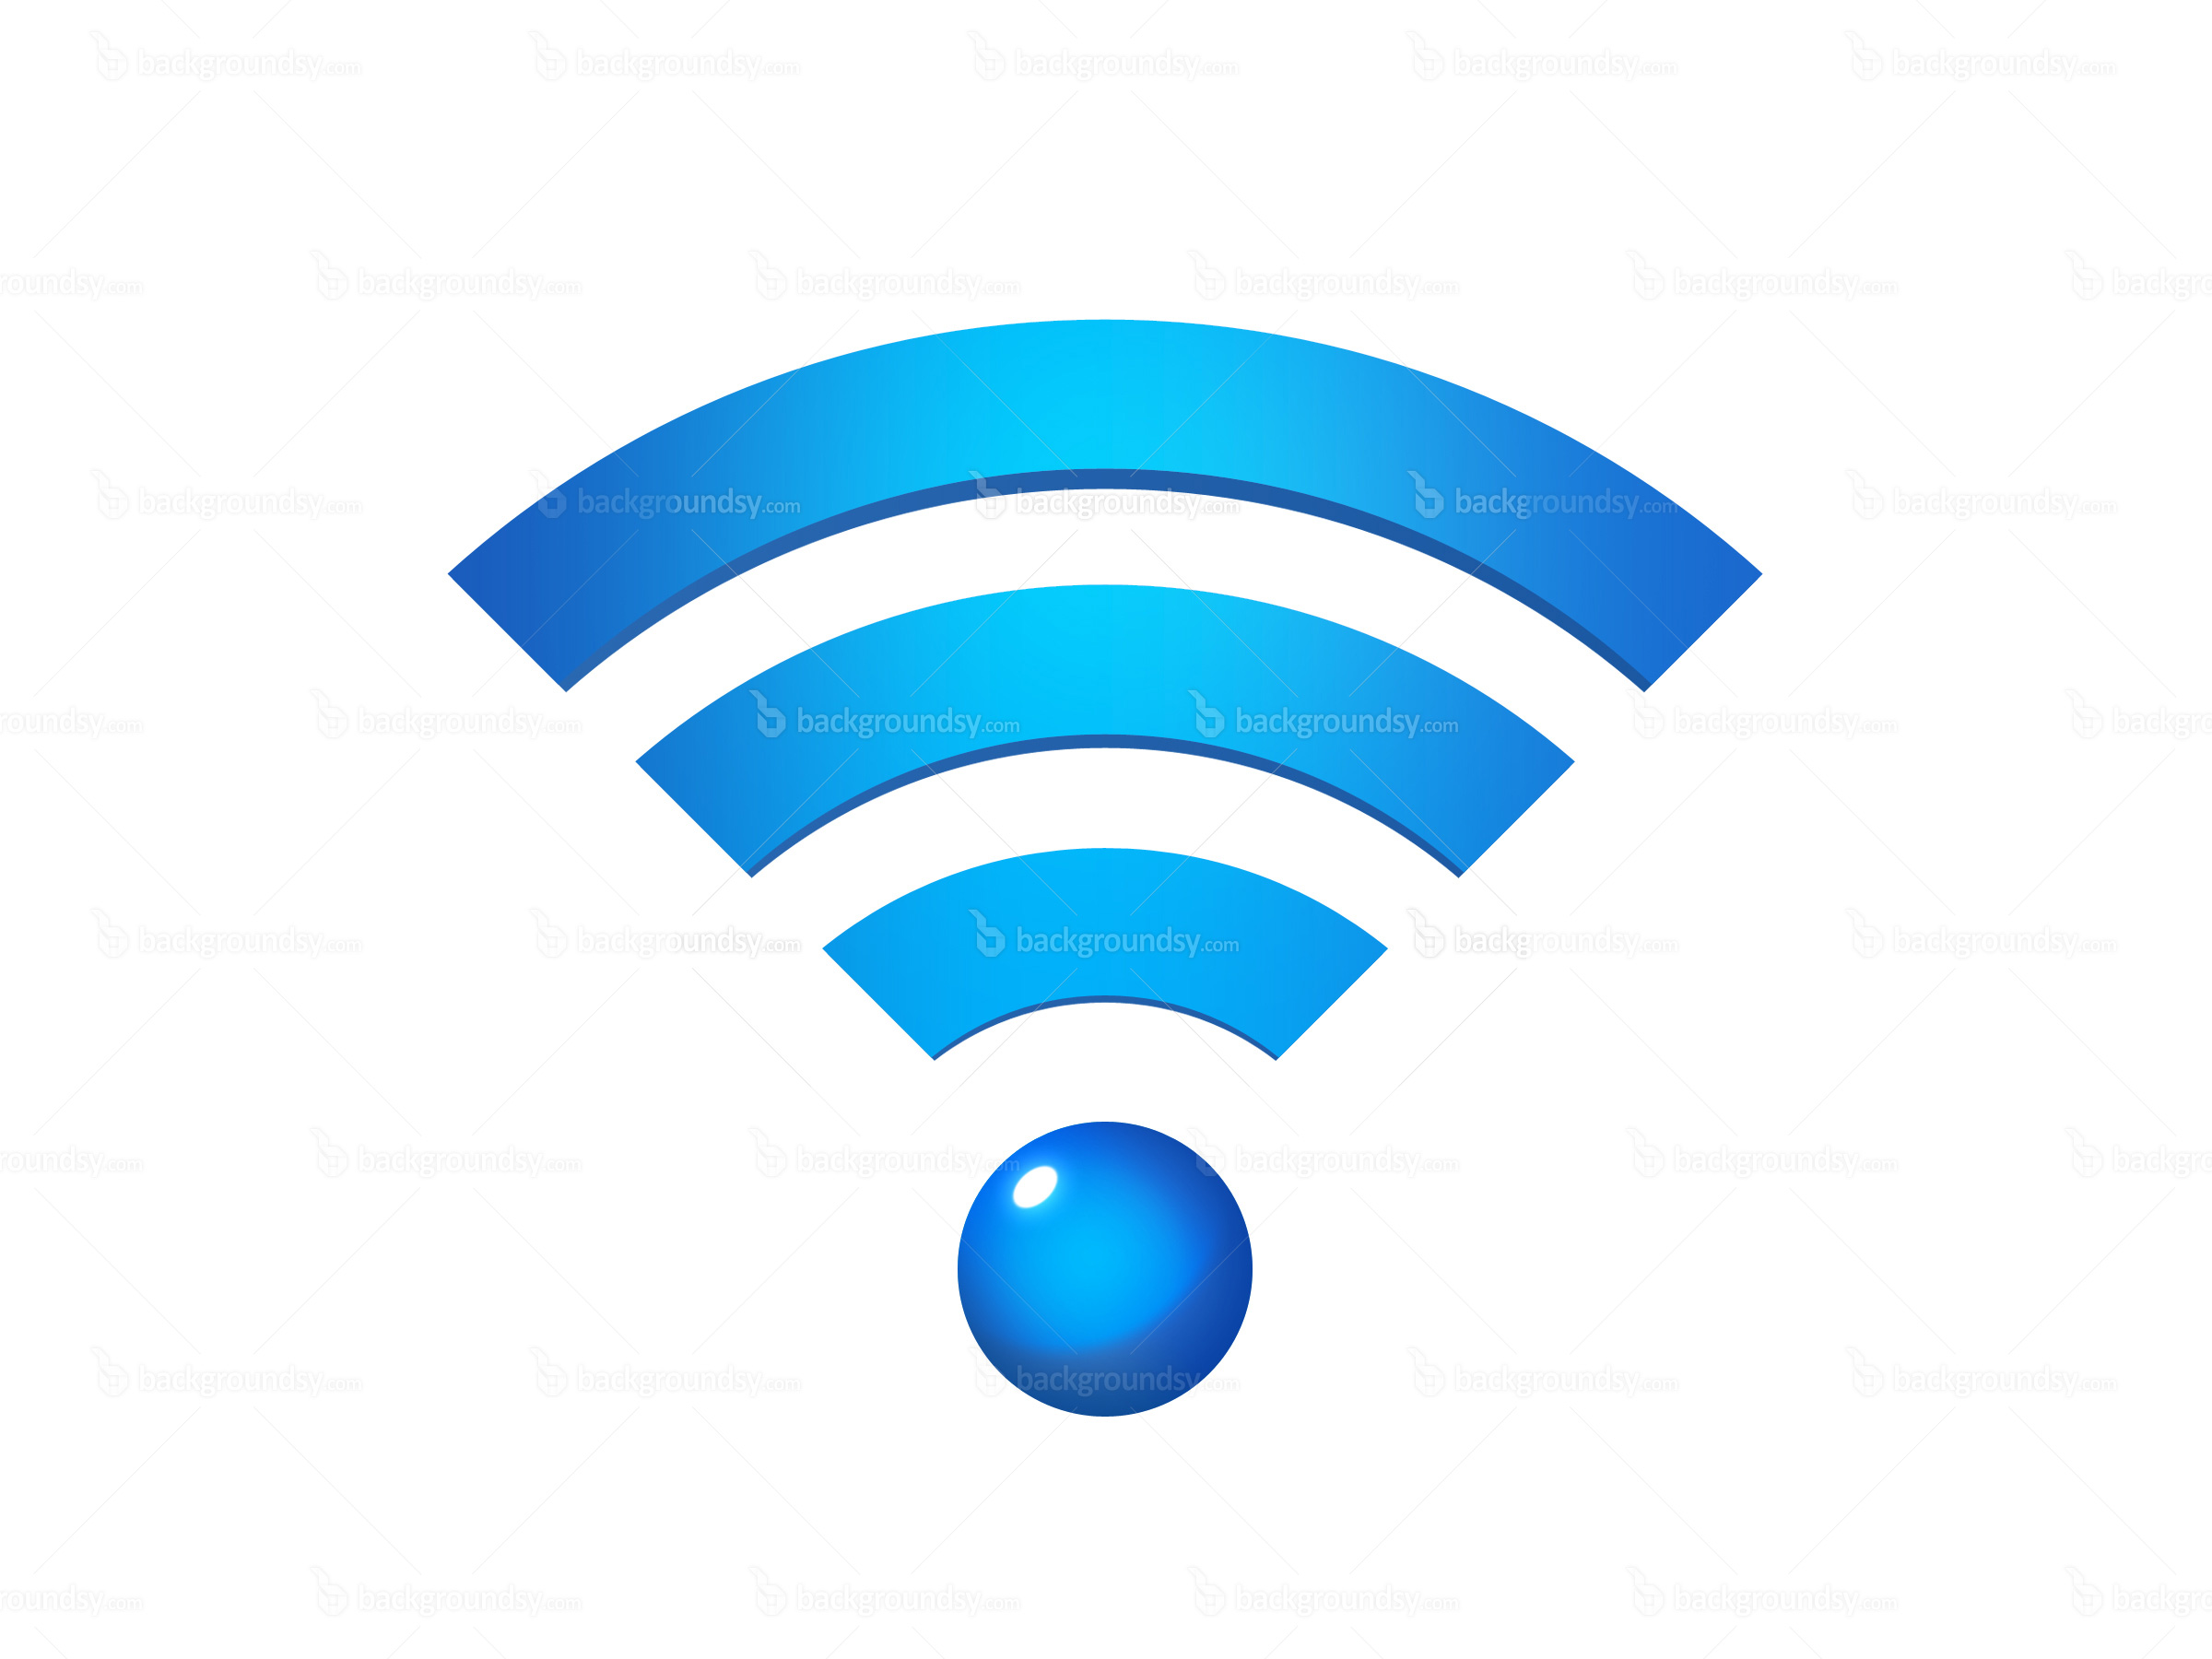 business wireless network